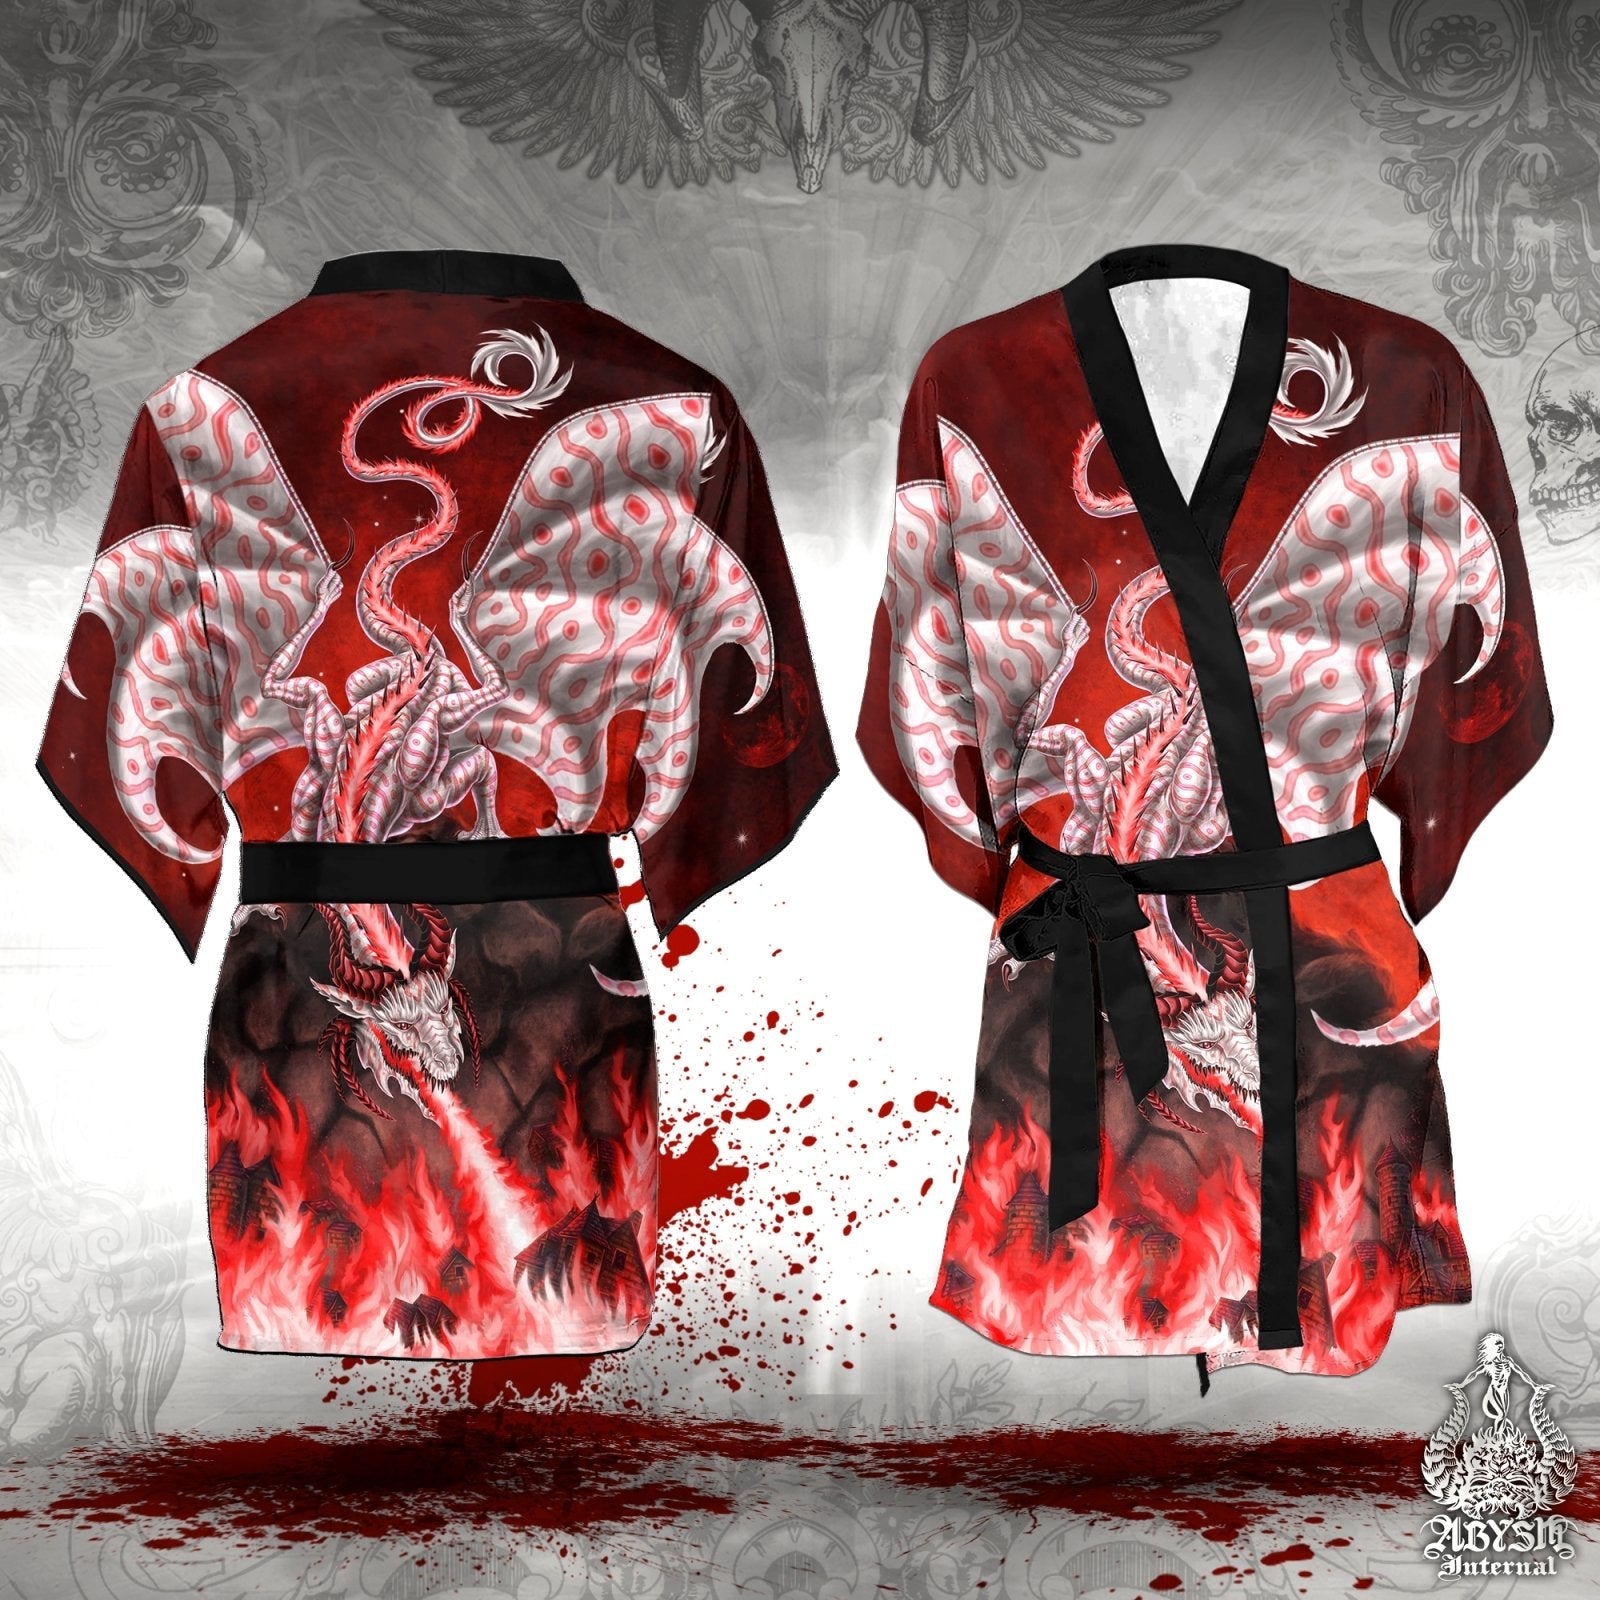 prompthunt: “fire breathing dragon, silk kimono”